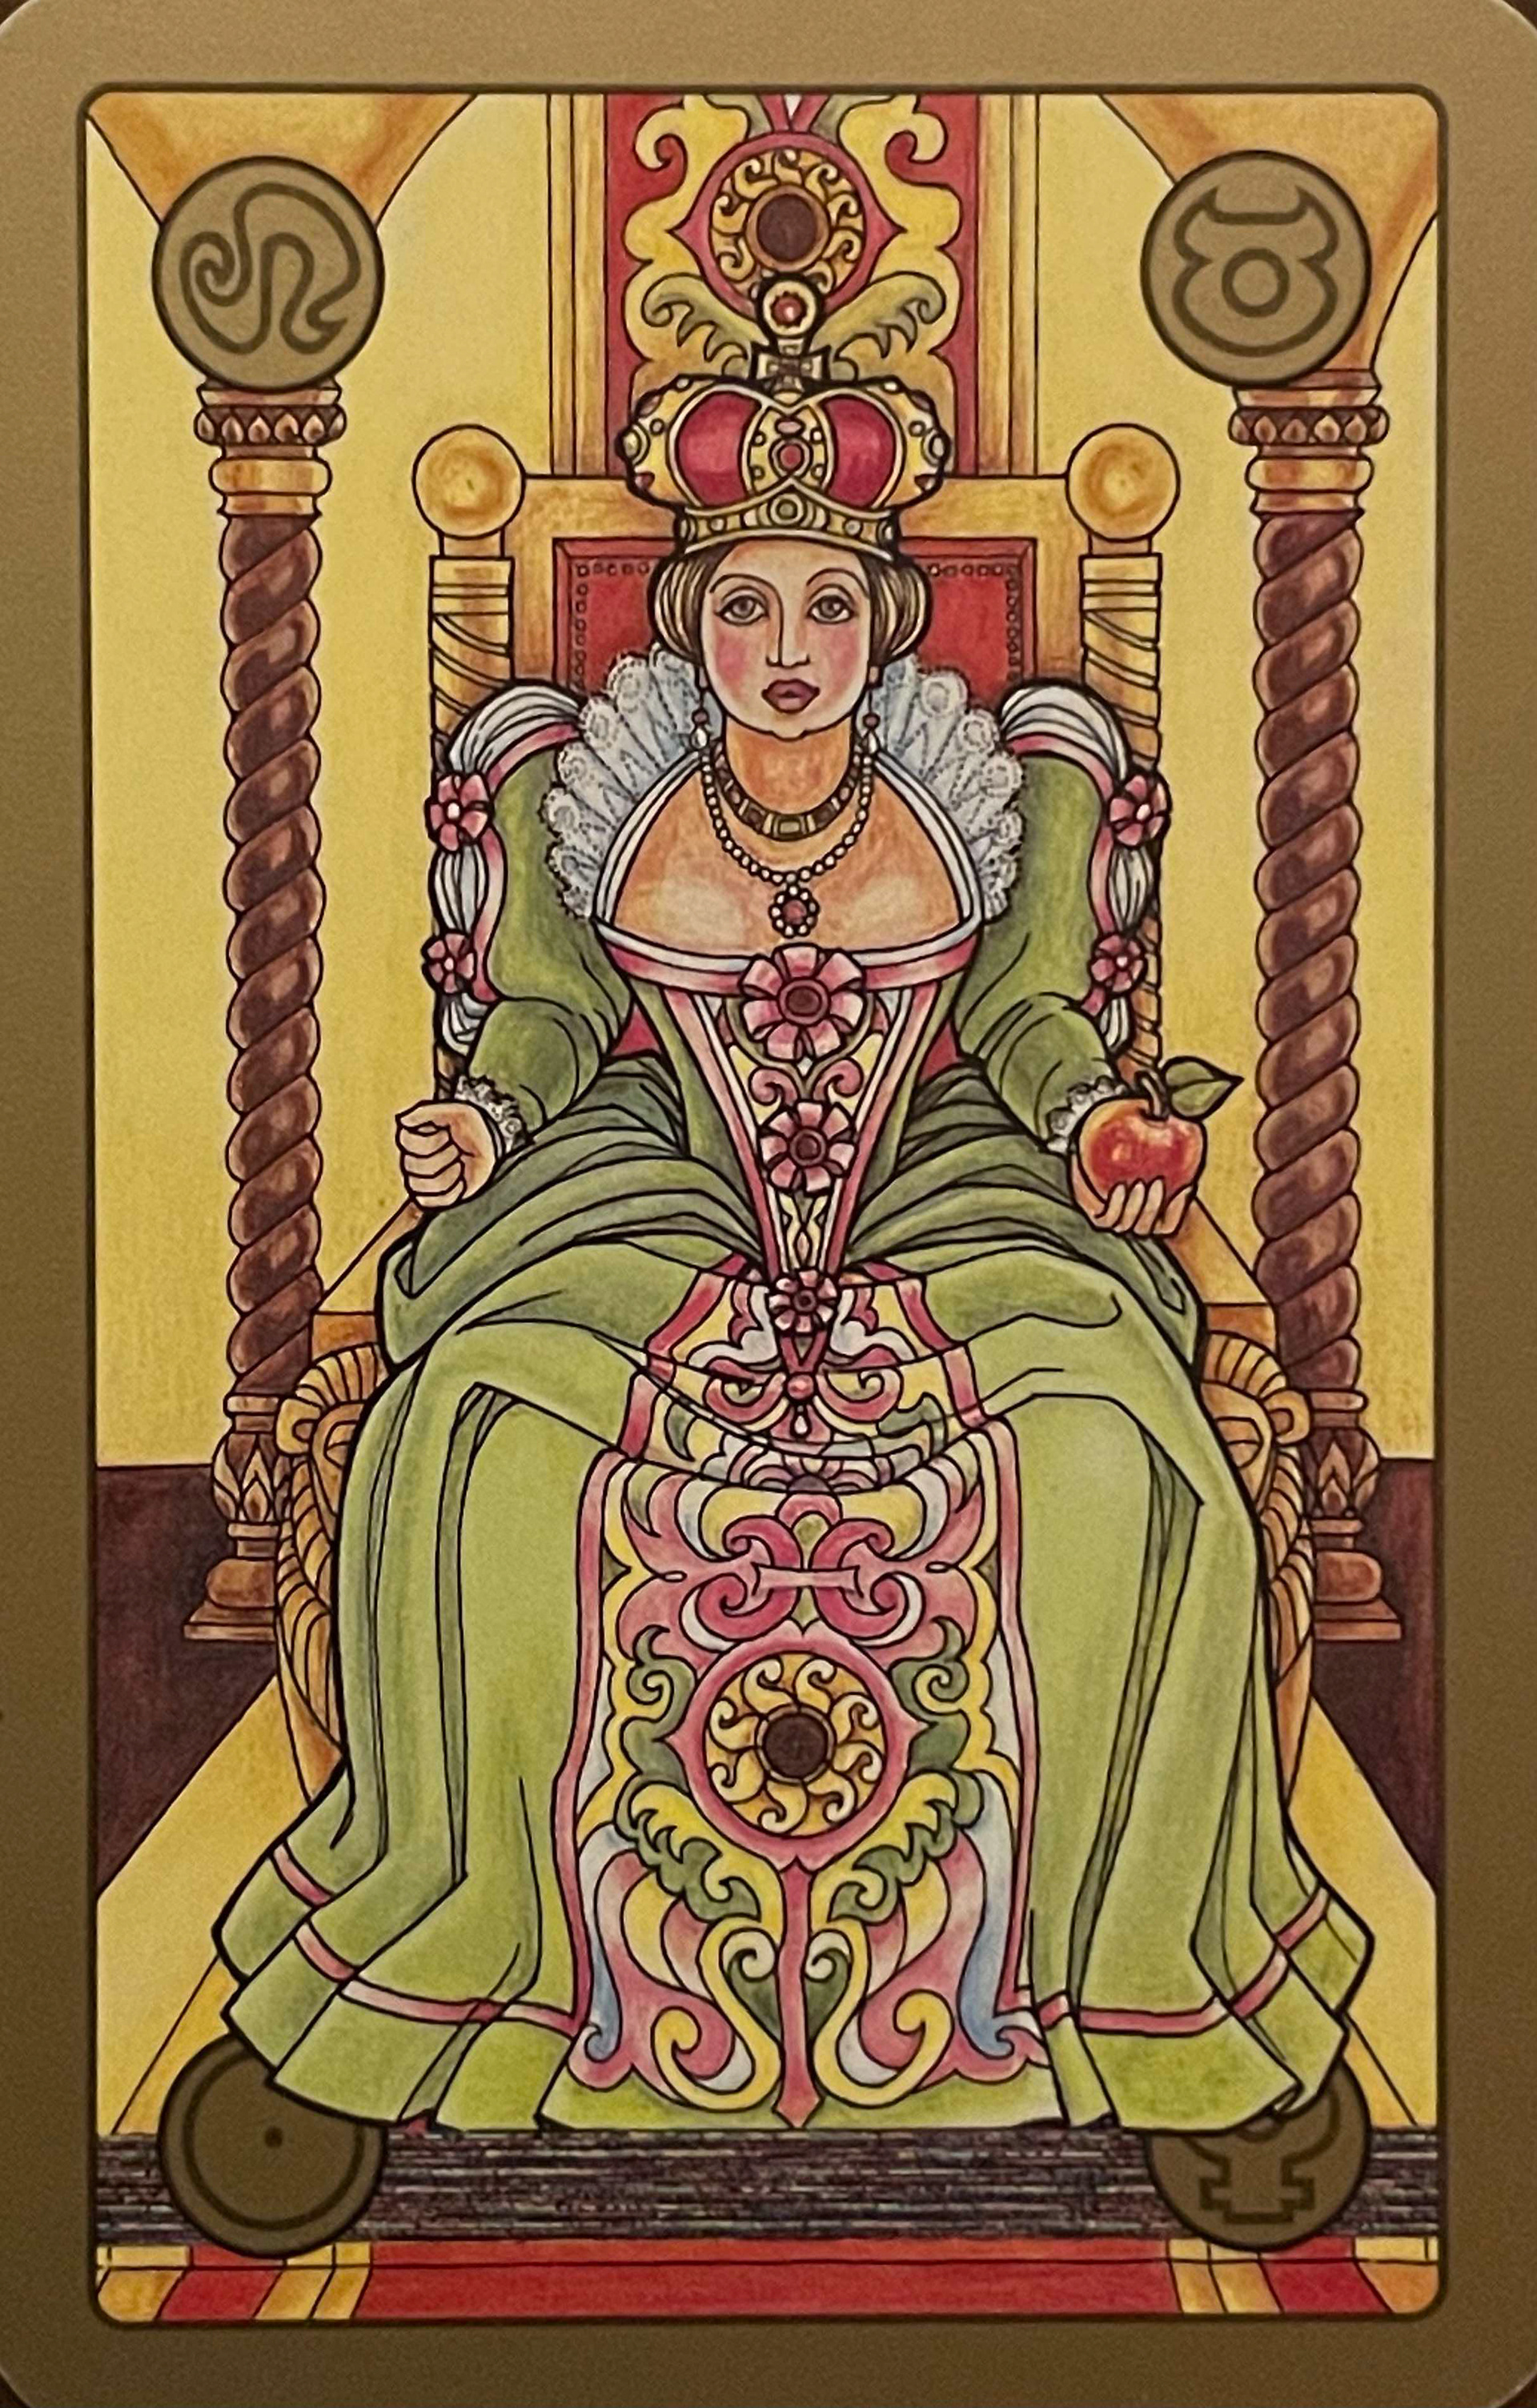 Meet The King and Queen of Cups - Tarot Thrones